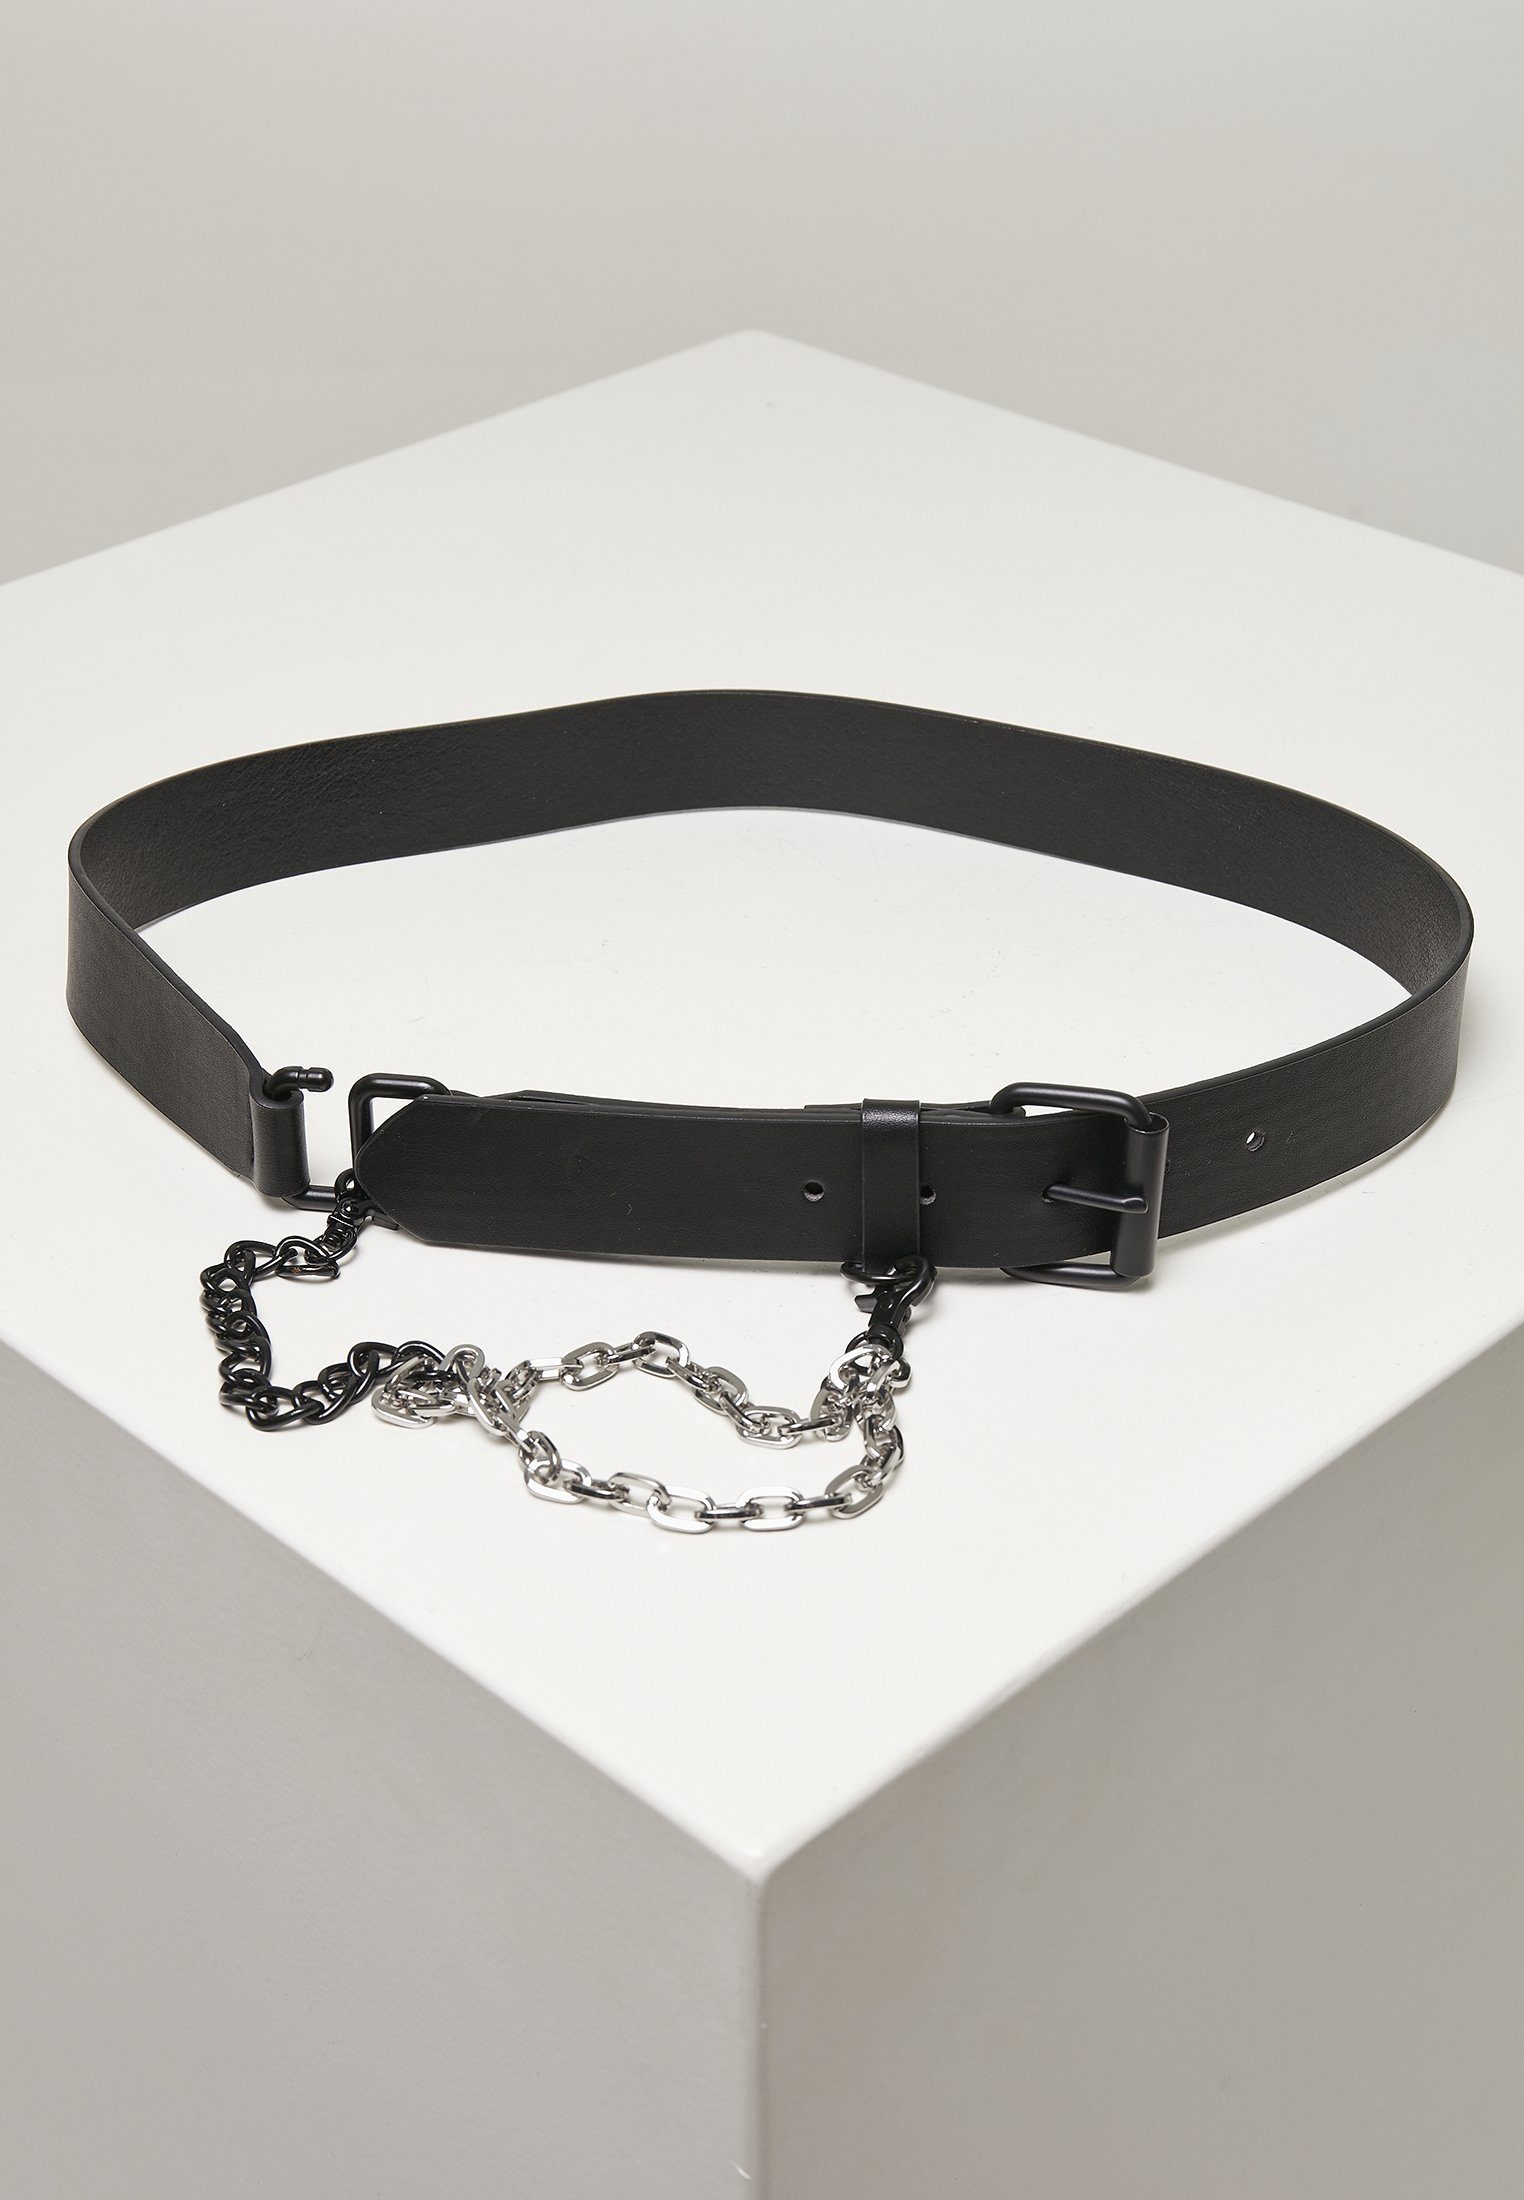 URBAN Accessories With Belt Chain Imitation Metal Hüftgürtel CLASSICS Leather